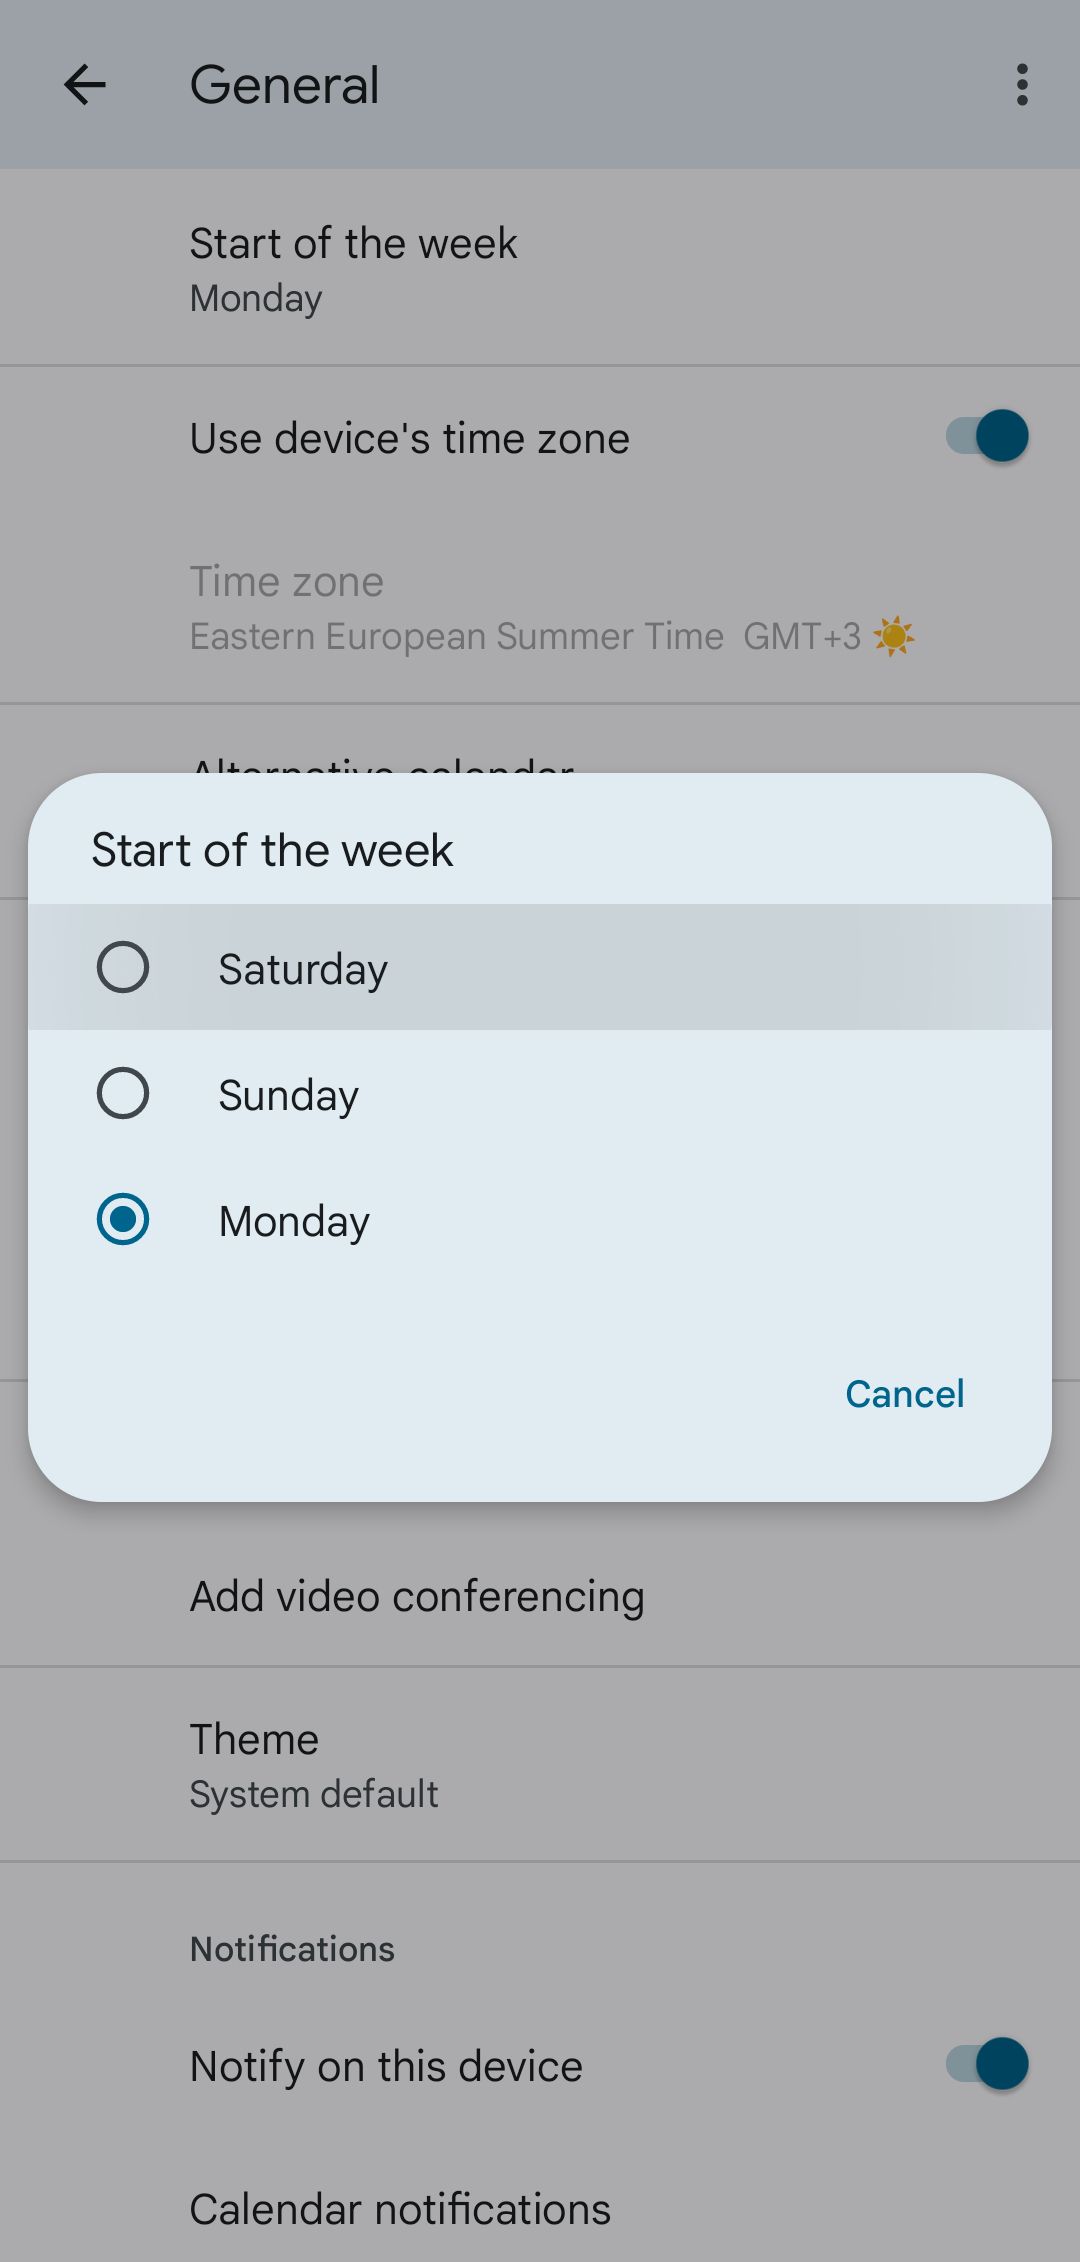 Start of the Week Options on Google Calendar